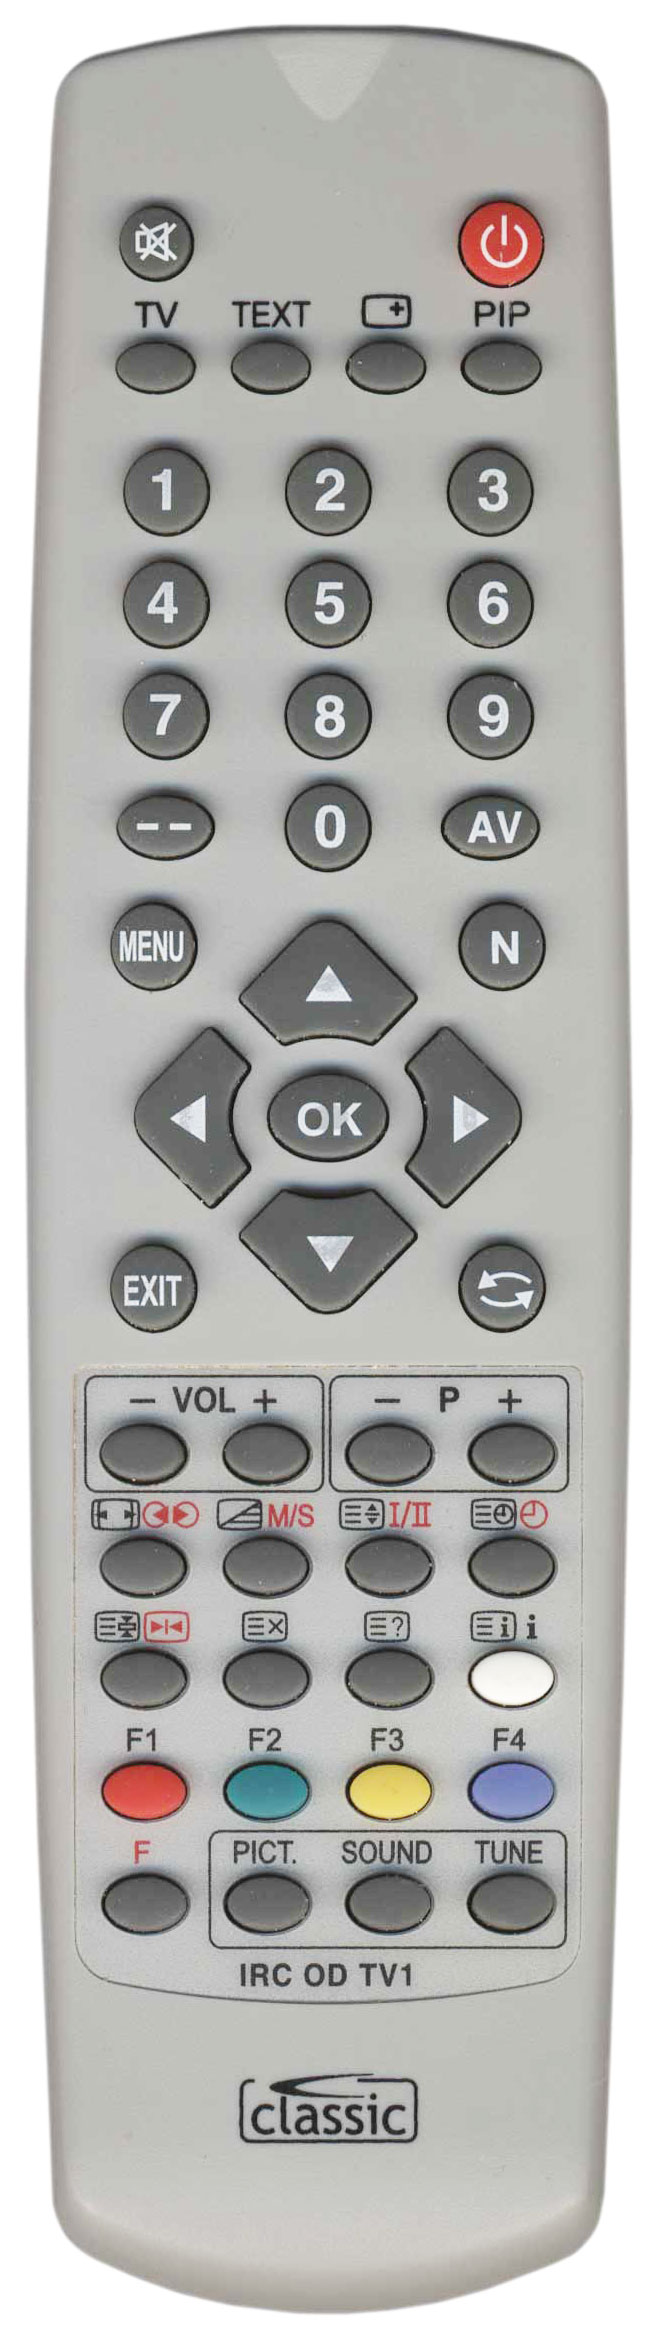 SAMSUNG SP42W4HPX Remote Control